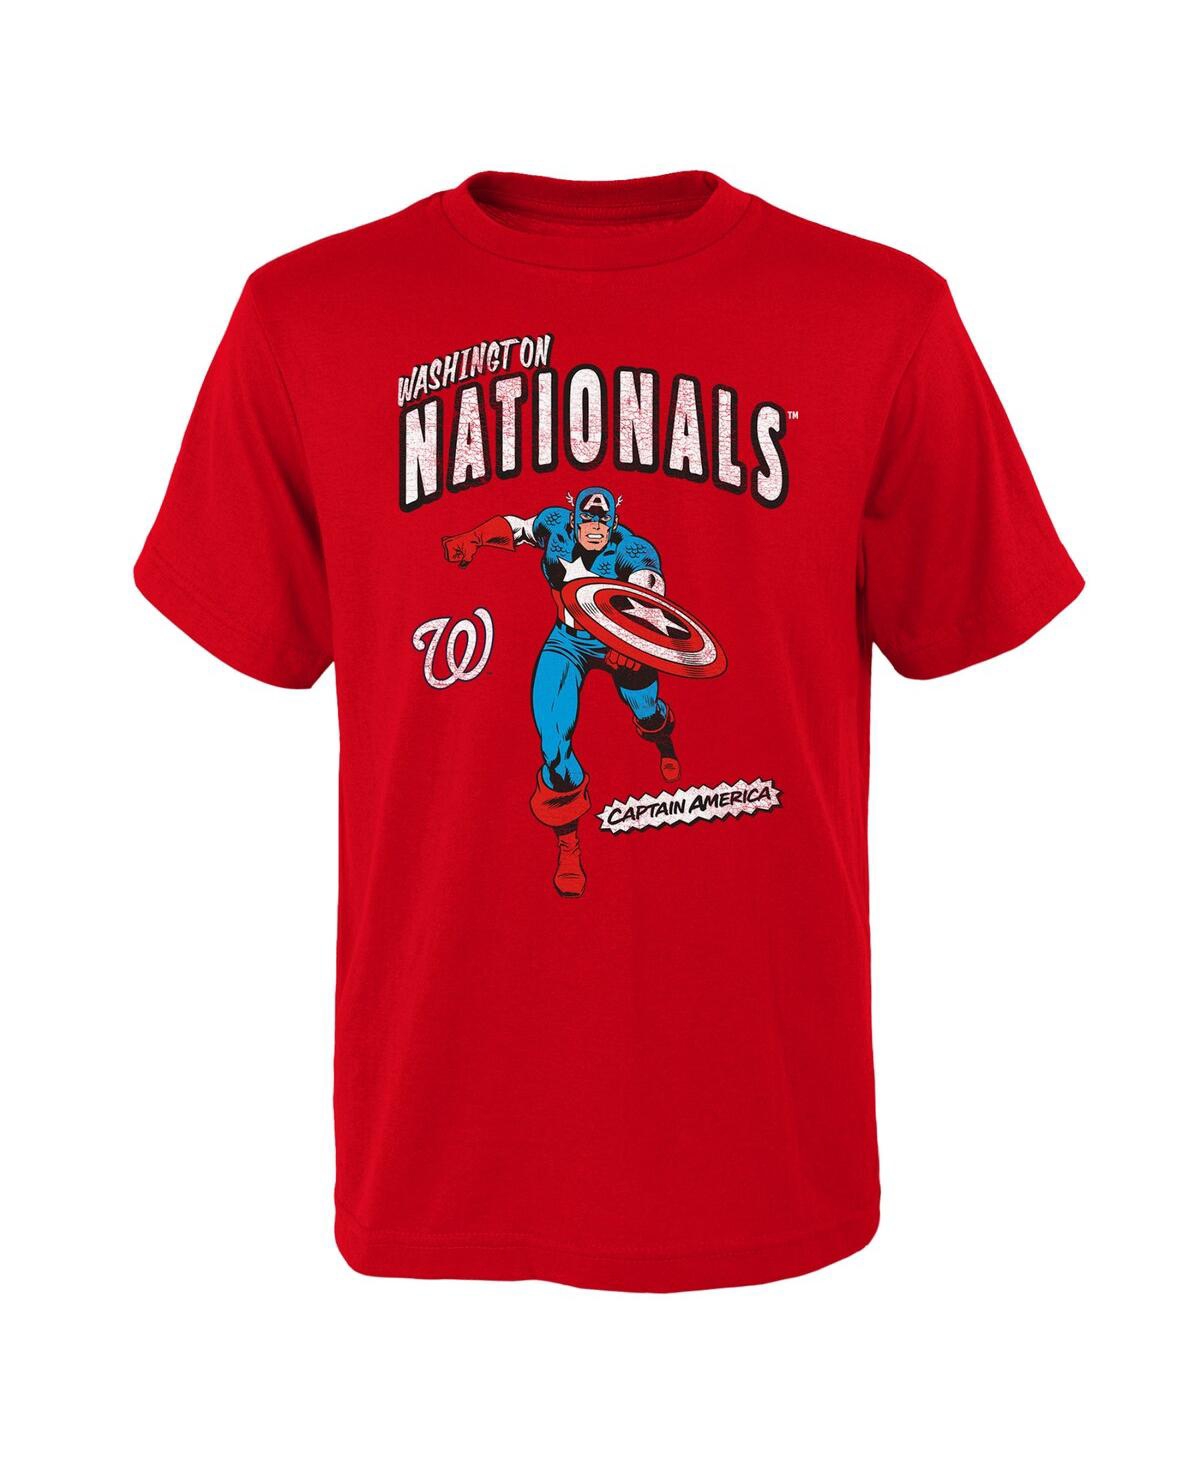 Outerstuff Kids' Big Boys Red Washington Nationals Team Captain America Marvel T-shirt